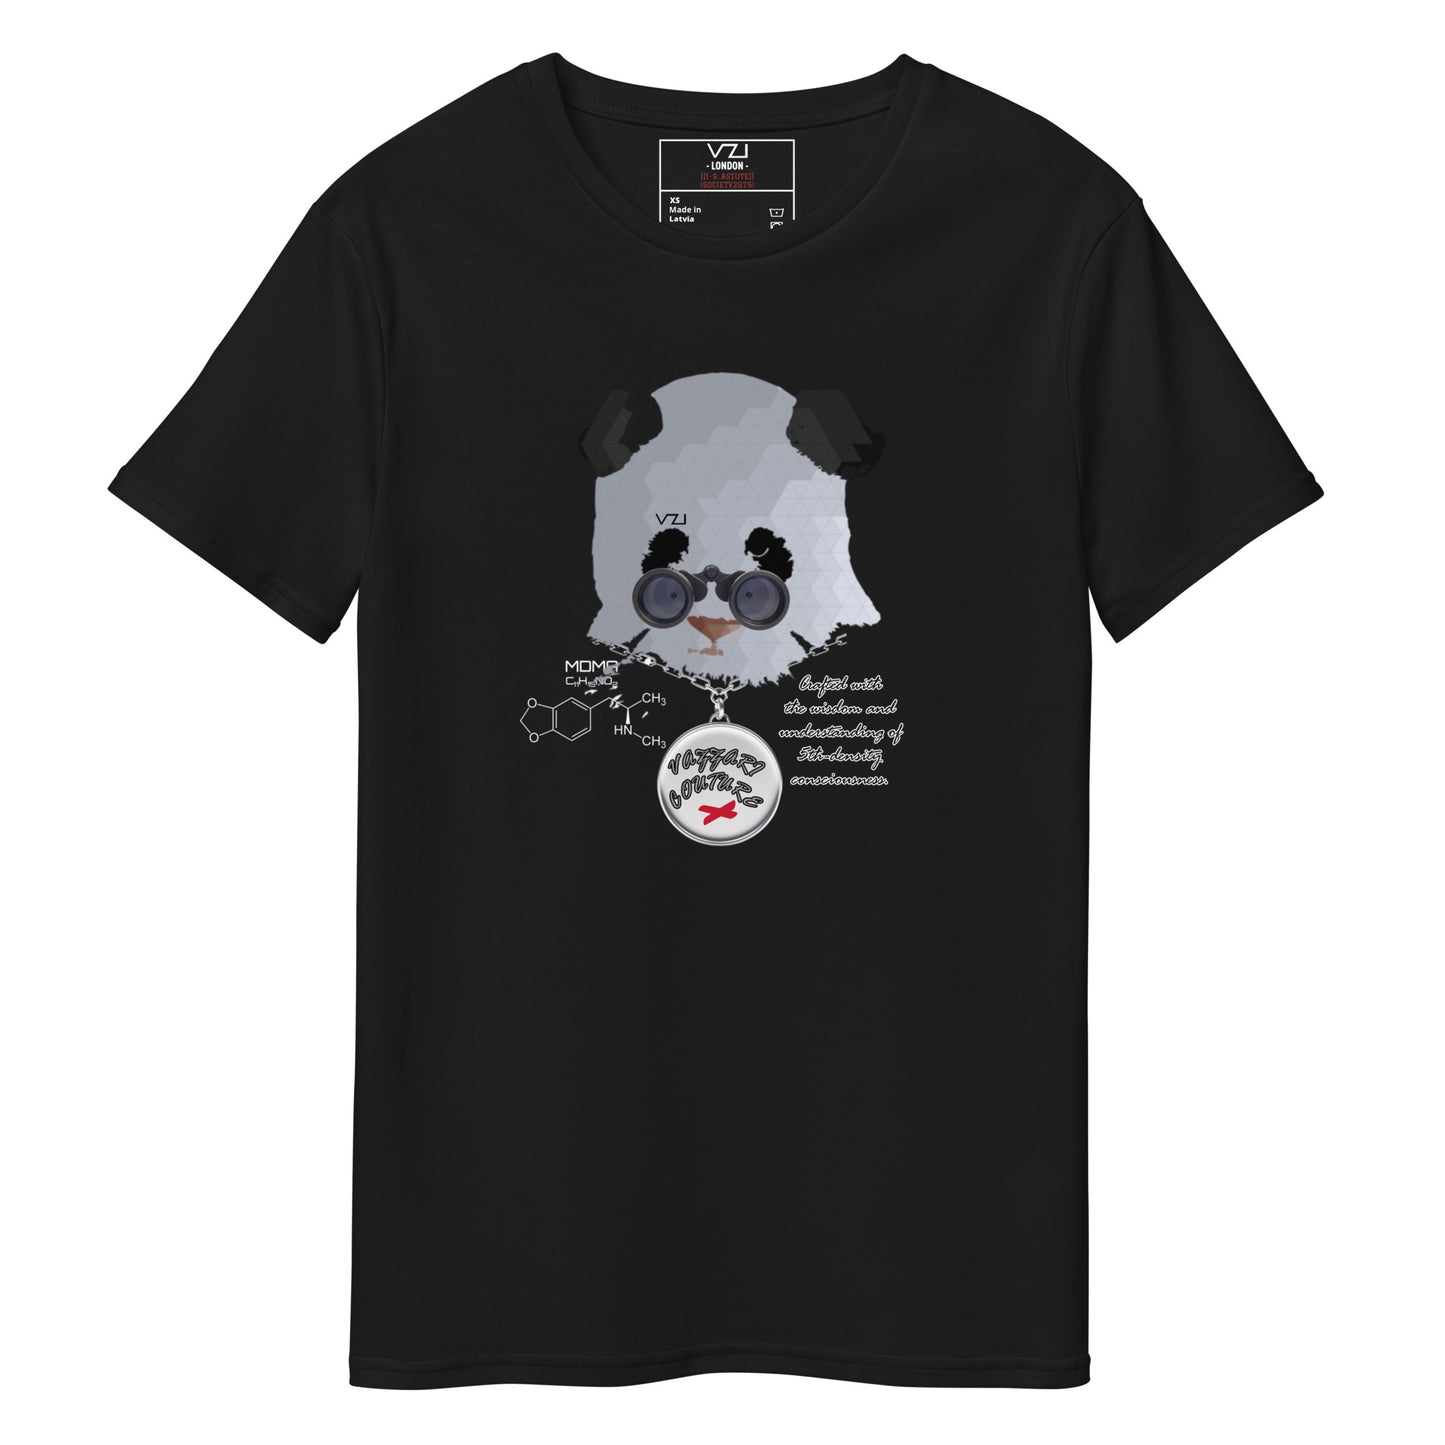 Ecstasy Panda - T-Shirt For Men's - Premium Cotton - Super Cotton, Smart Casual, Streetwear, High-End Couture